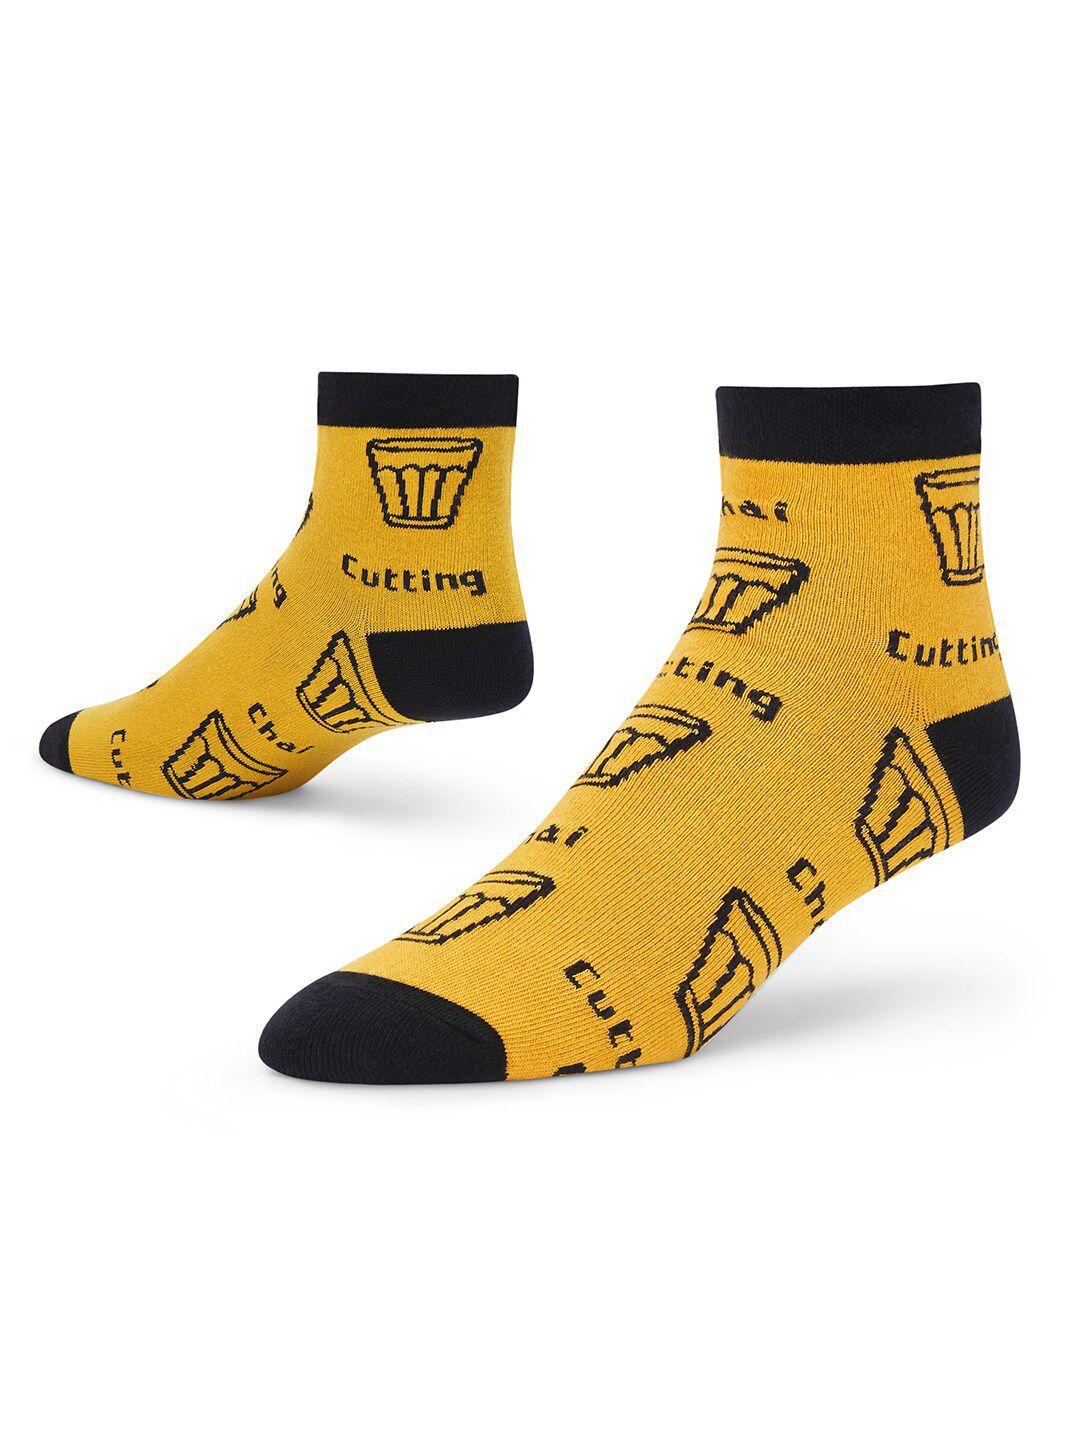 dynamocks mustard yellow & black conversational patterned ankle length socks